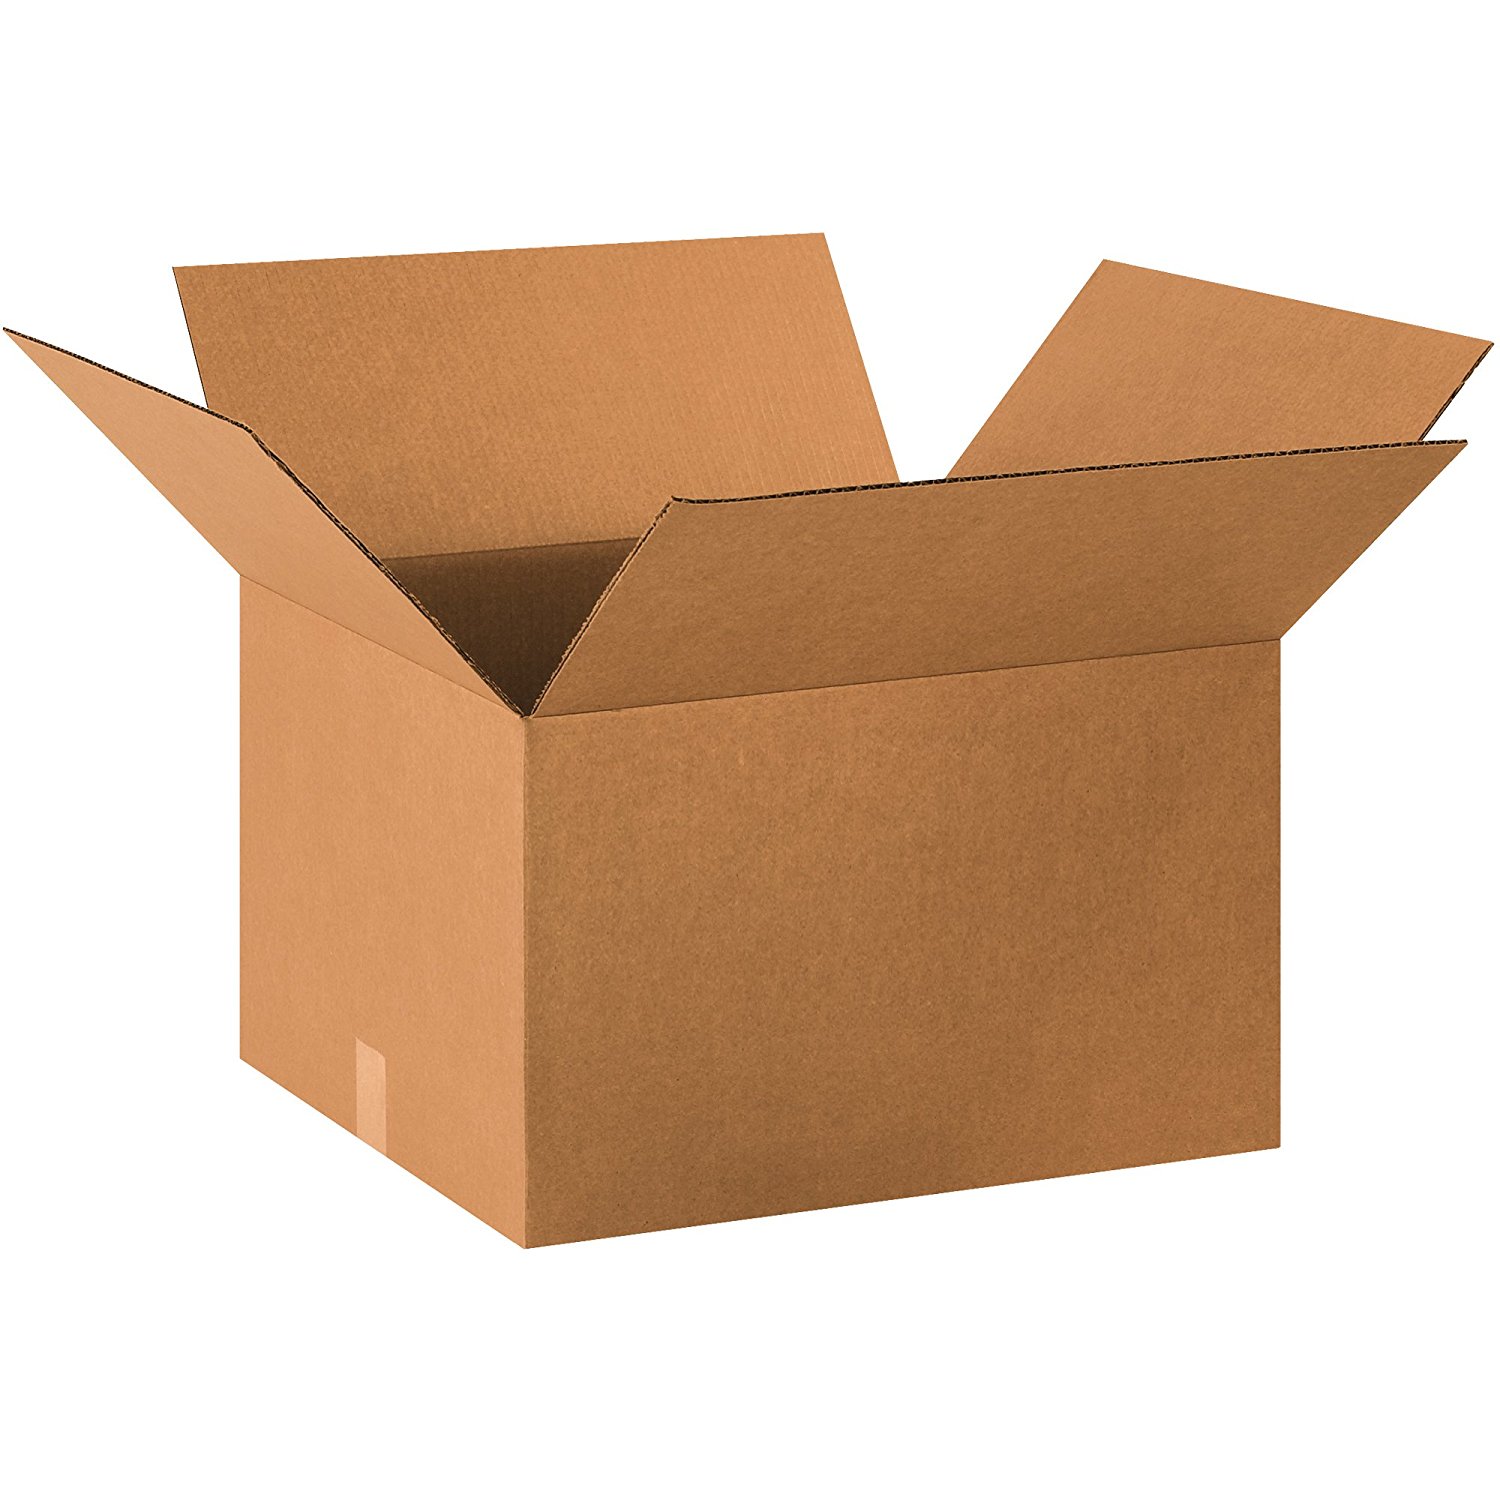 Amazon.com: BOX USA B201812 Corrugated Boxes, 20